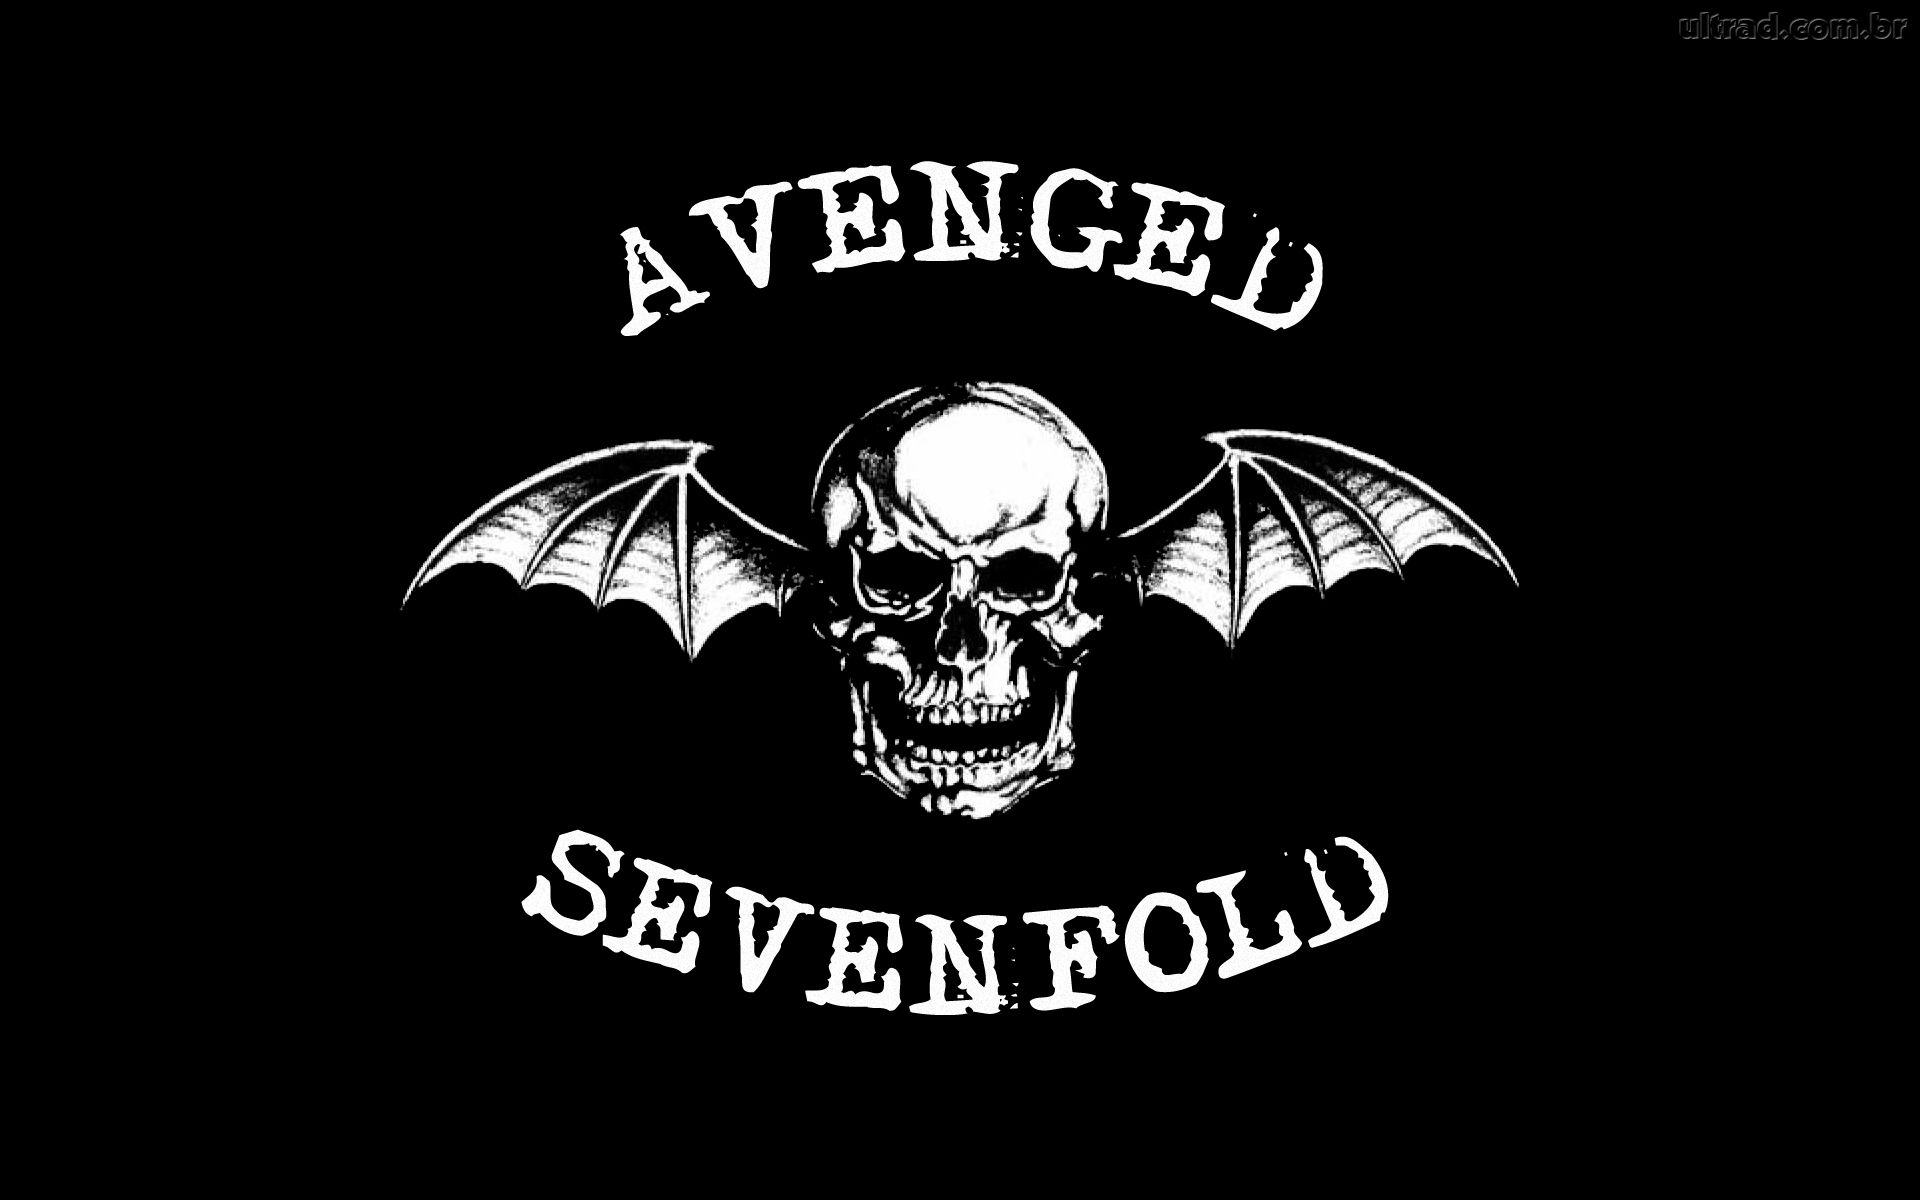 Avenged Sevenfold in Israel